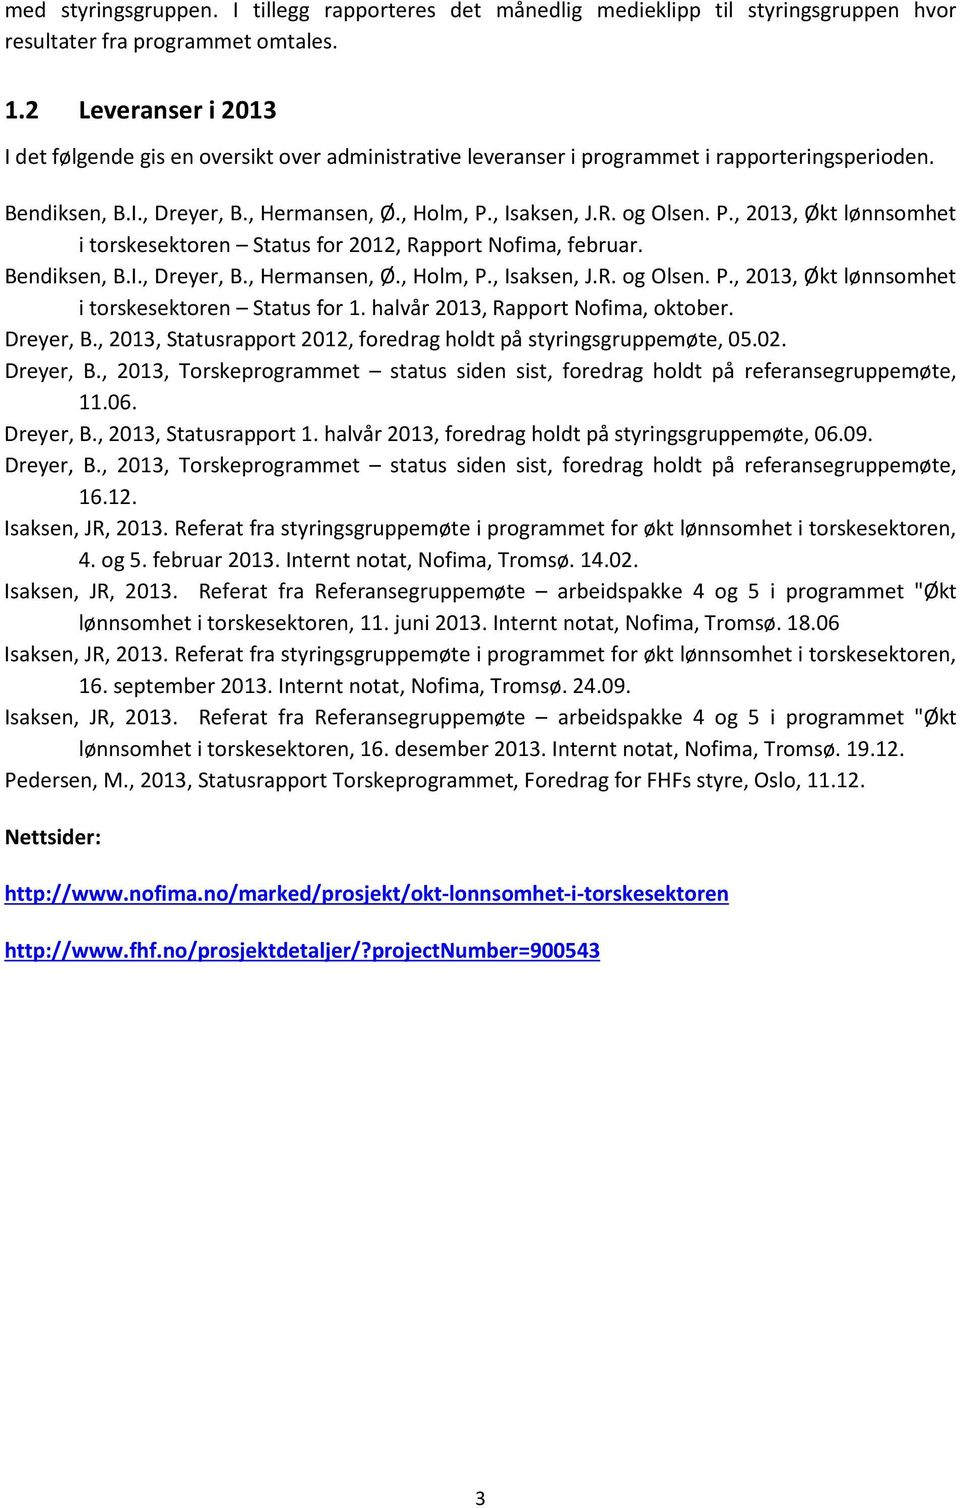 , Isaksen, J.R. og Olsen. P., 2013, Økt lønnsomhet i torskesektoren Status for 2012, Rapport Nofima, februar. Bendiksen, B.I., Dreyer, B., Hermansen, Ø., Holm, P., Isaksen, J.R. og Olsen. P., 2013, Økt lønnsomhet i torskesektoren Status for 1.